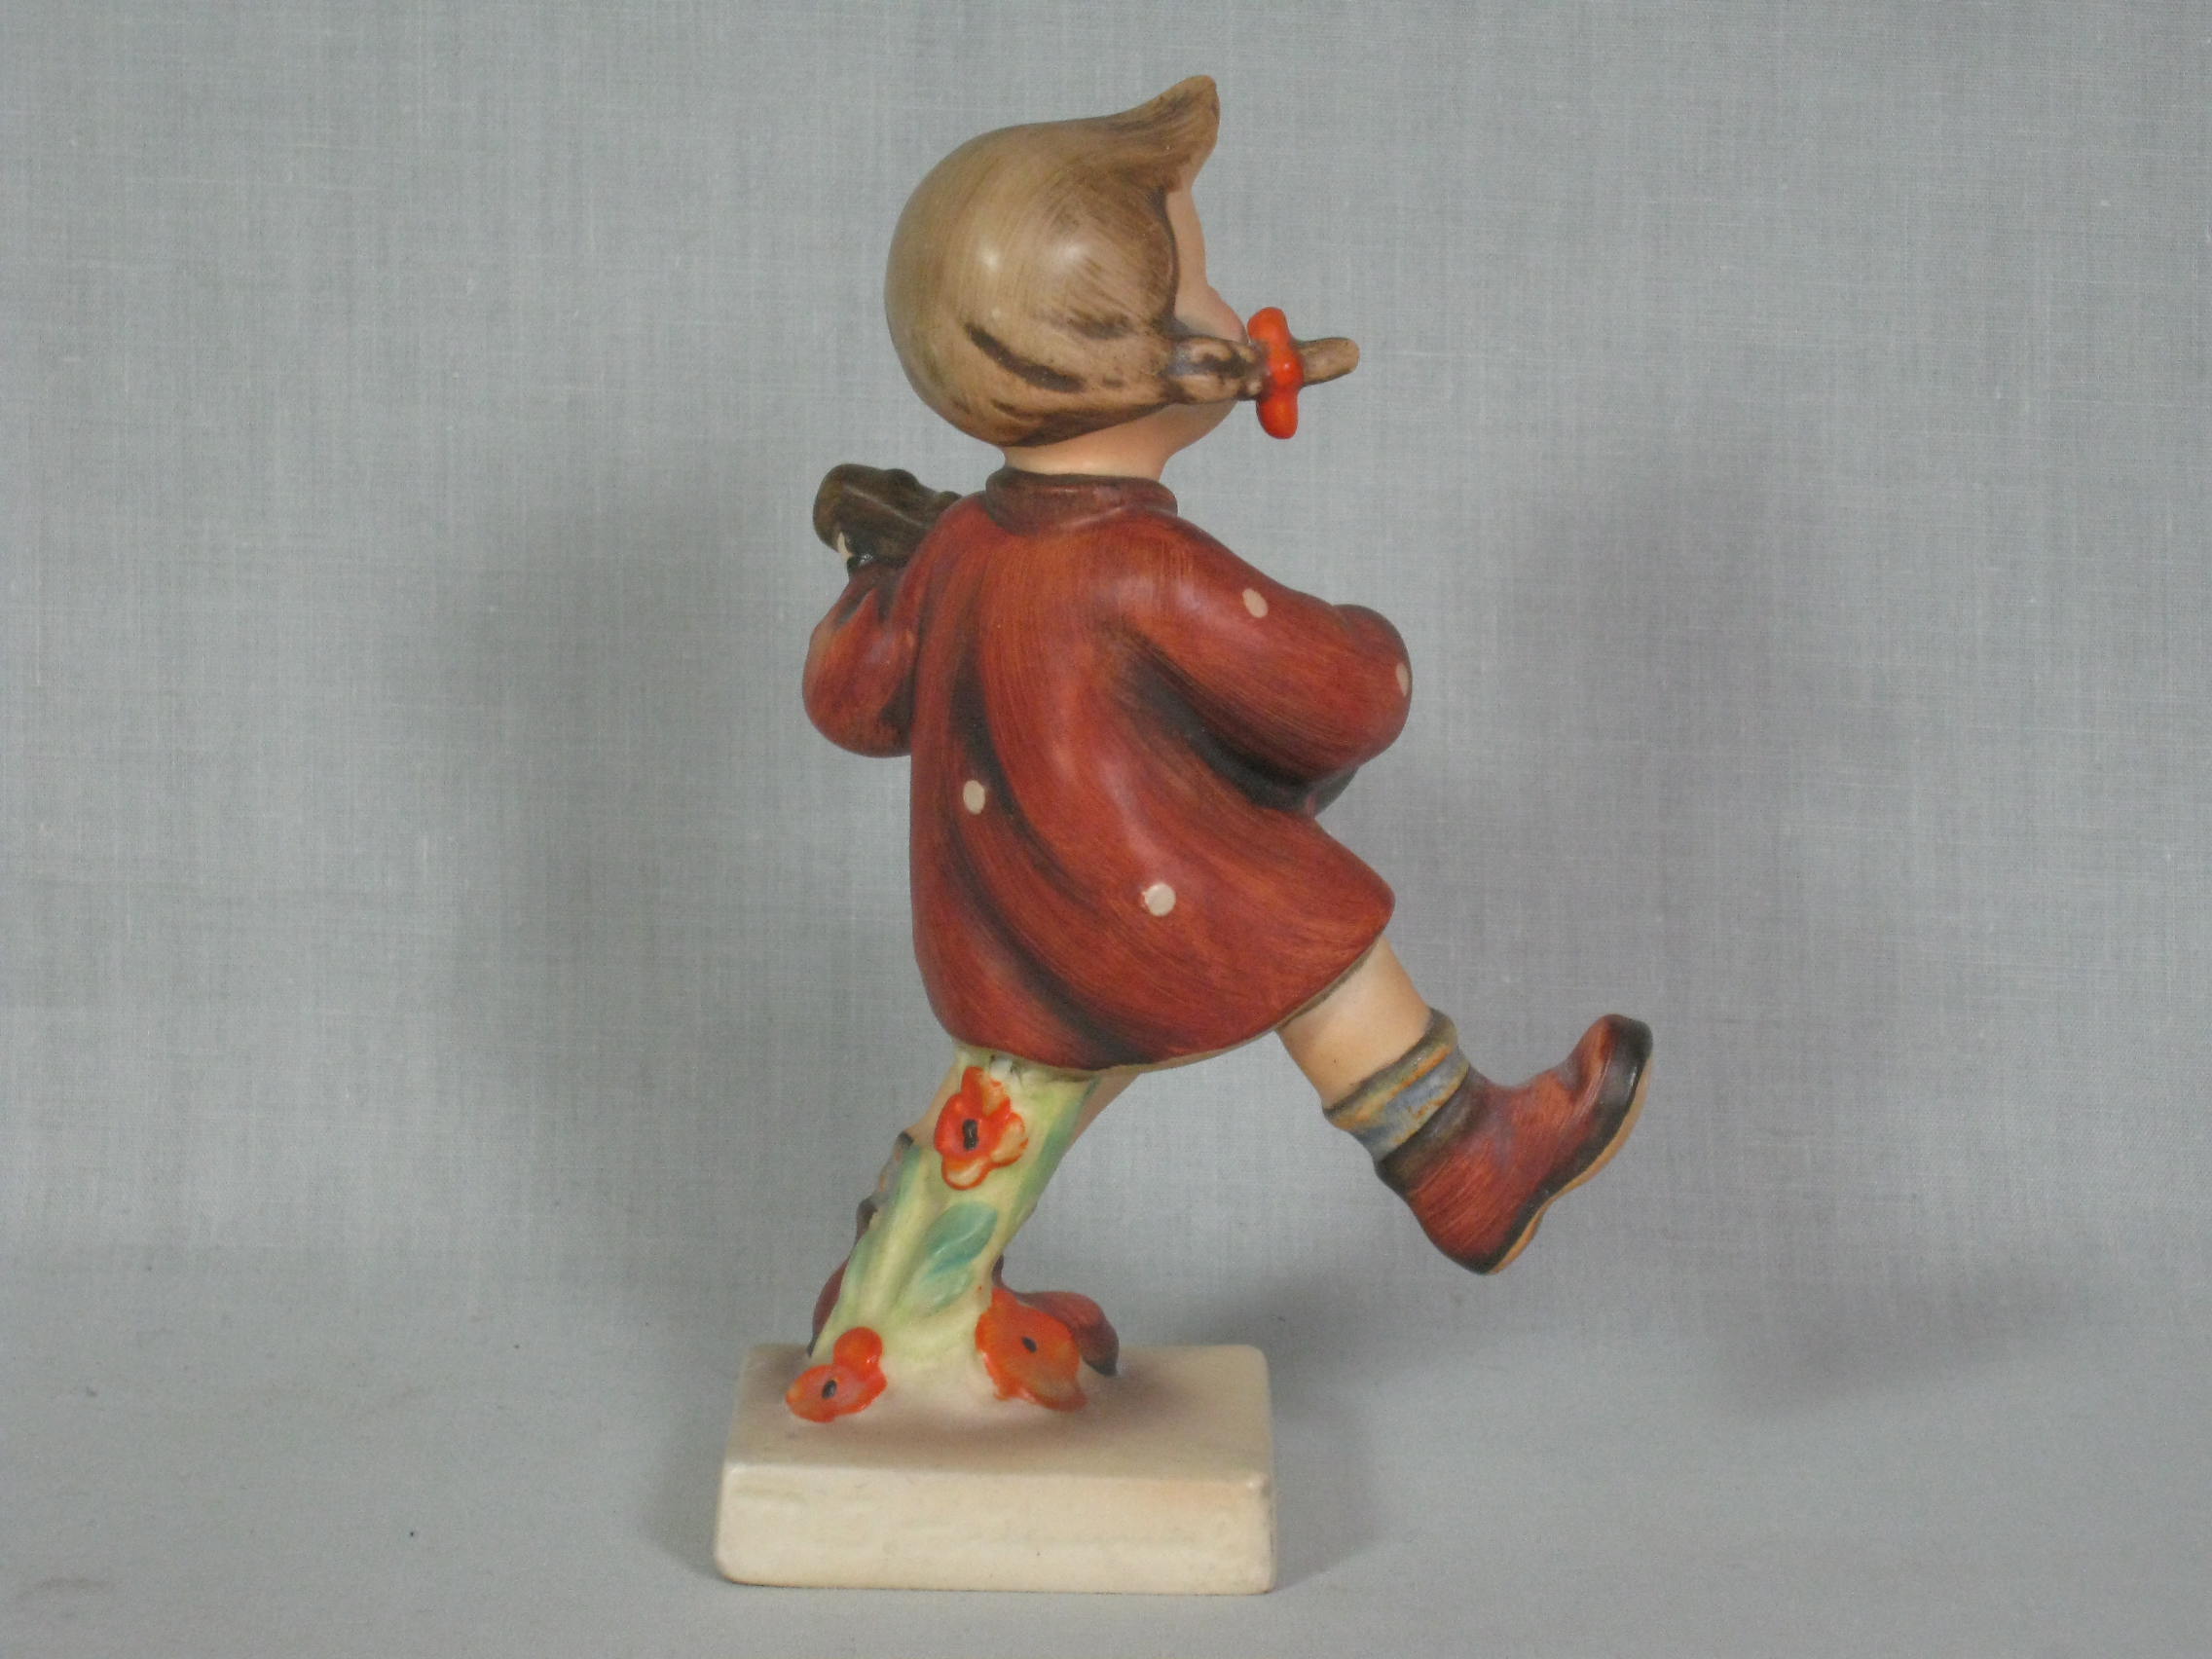 Vintage Hummel Figurine Happiness 86 TMK-2 Girl With Banjo Full Bee Mark Germany 4